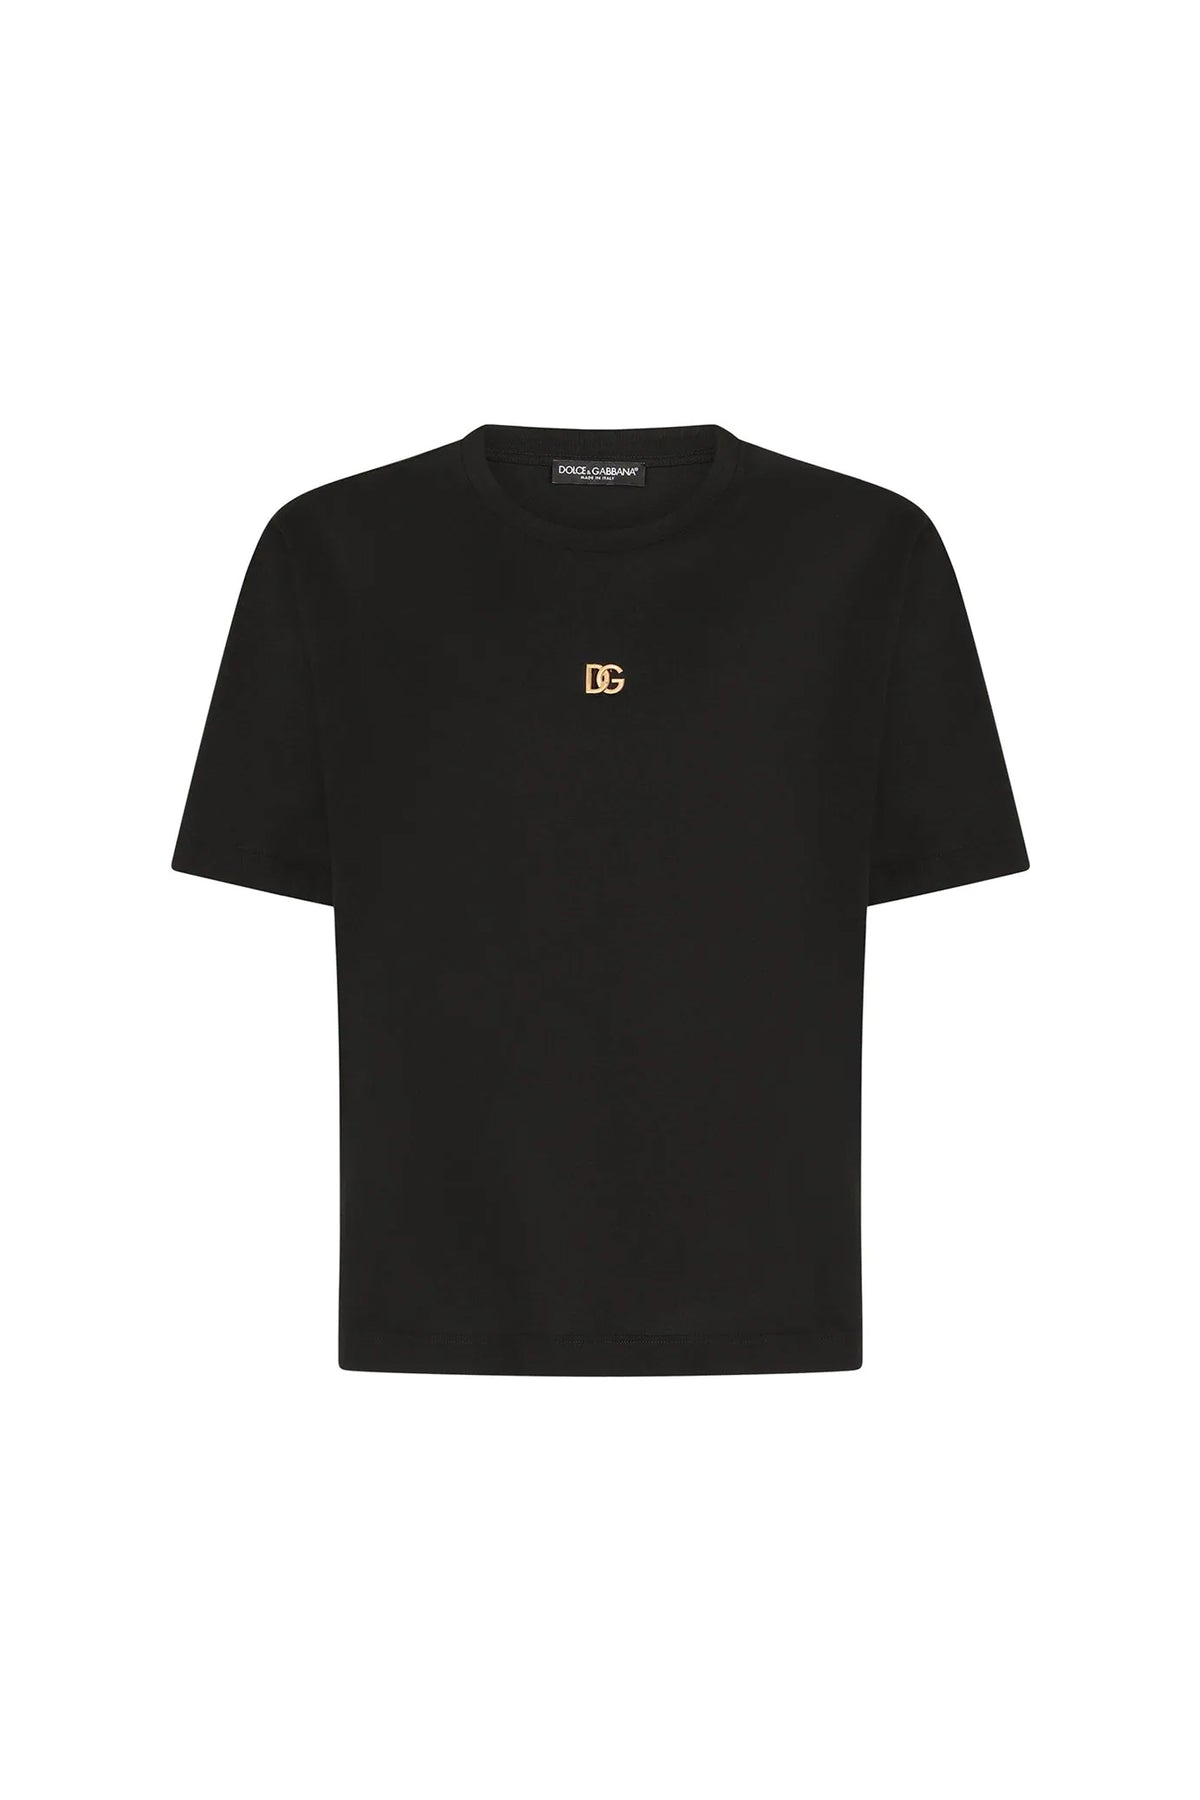 Dolce & Gabbana logo plaque cotton T-shirt